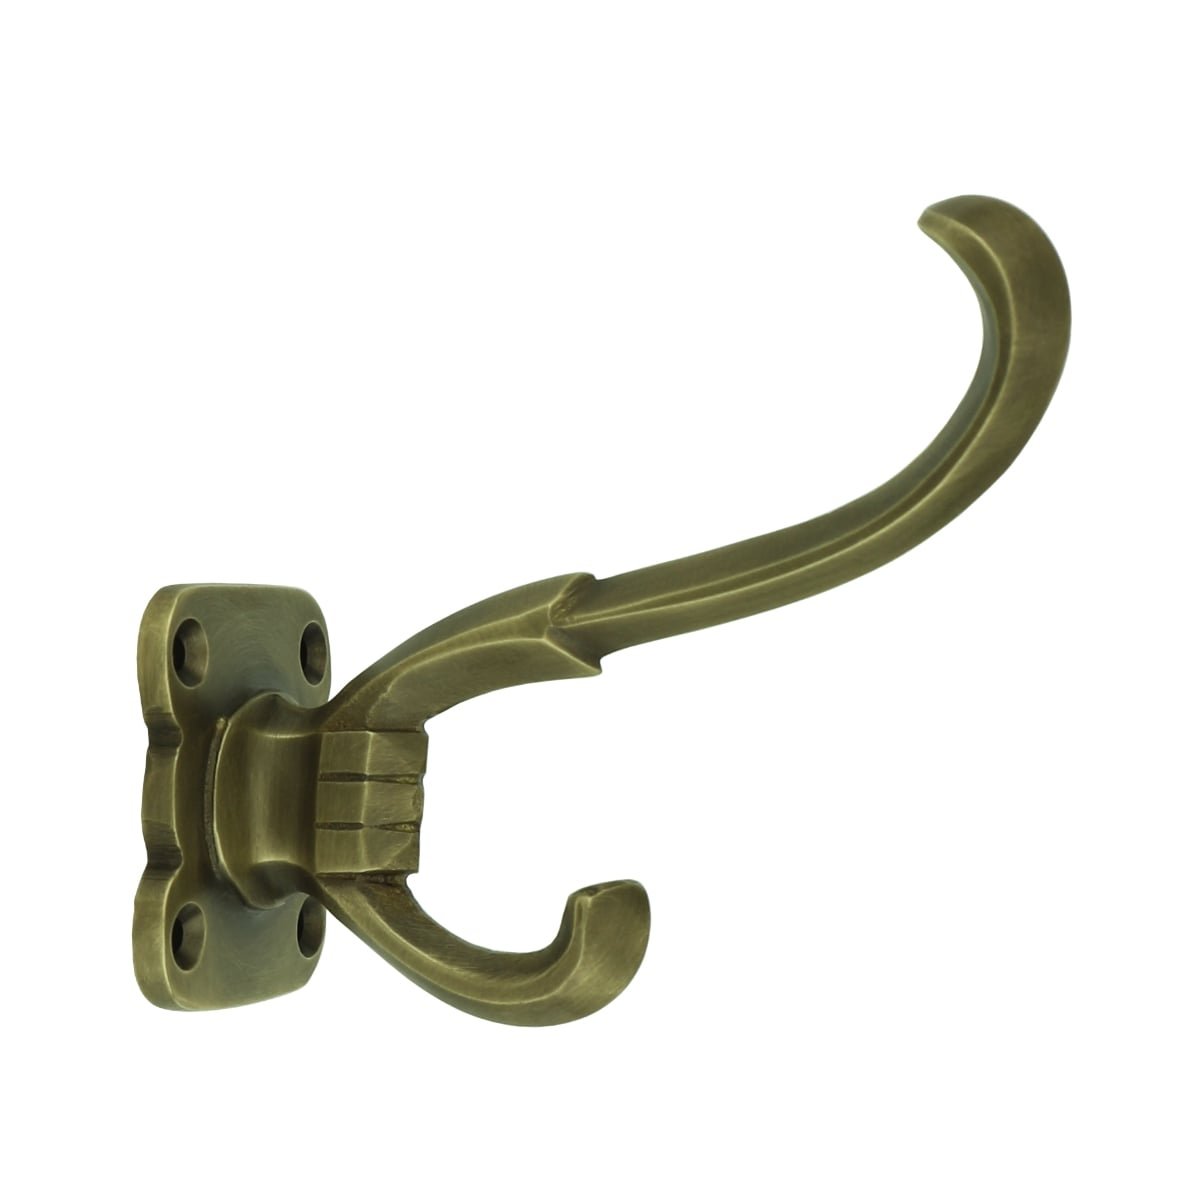 Dishcloth hook old brass Genthin - 80 mm